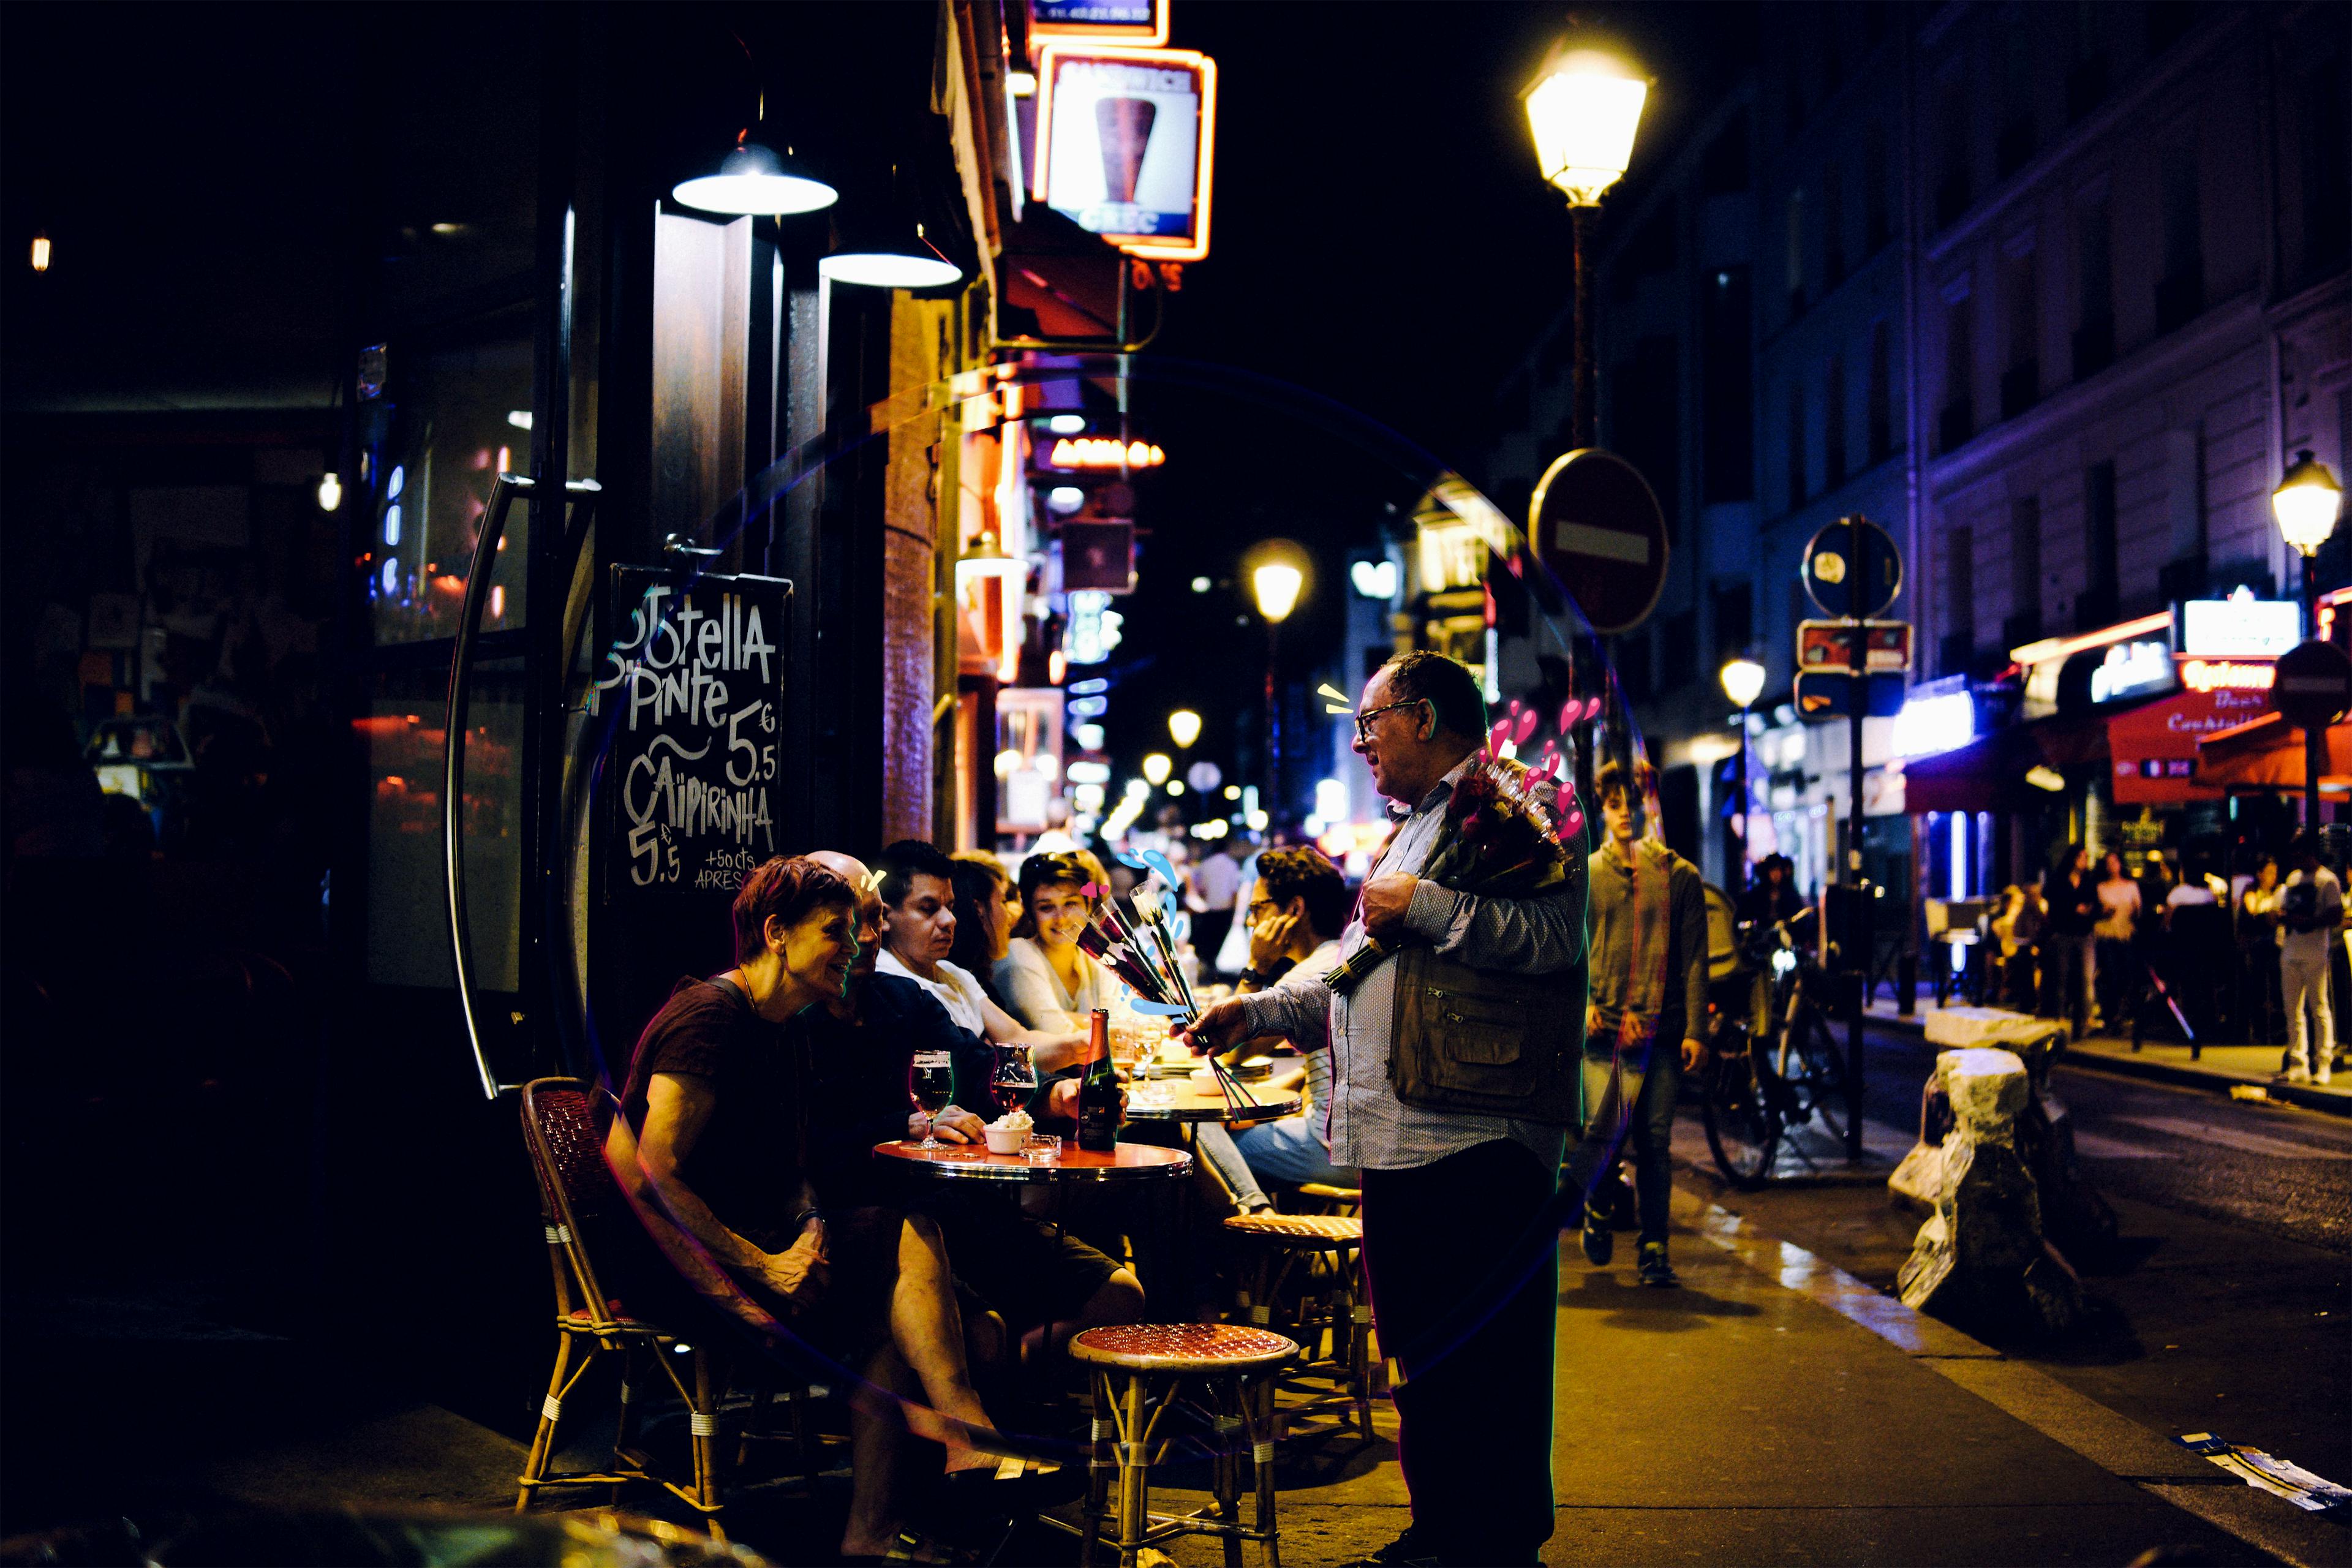 Image - Cafe in Paris at night